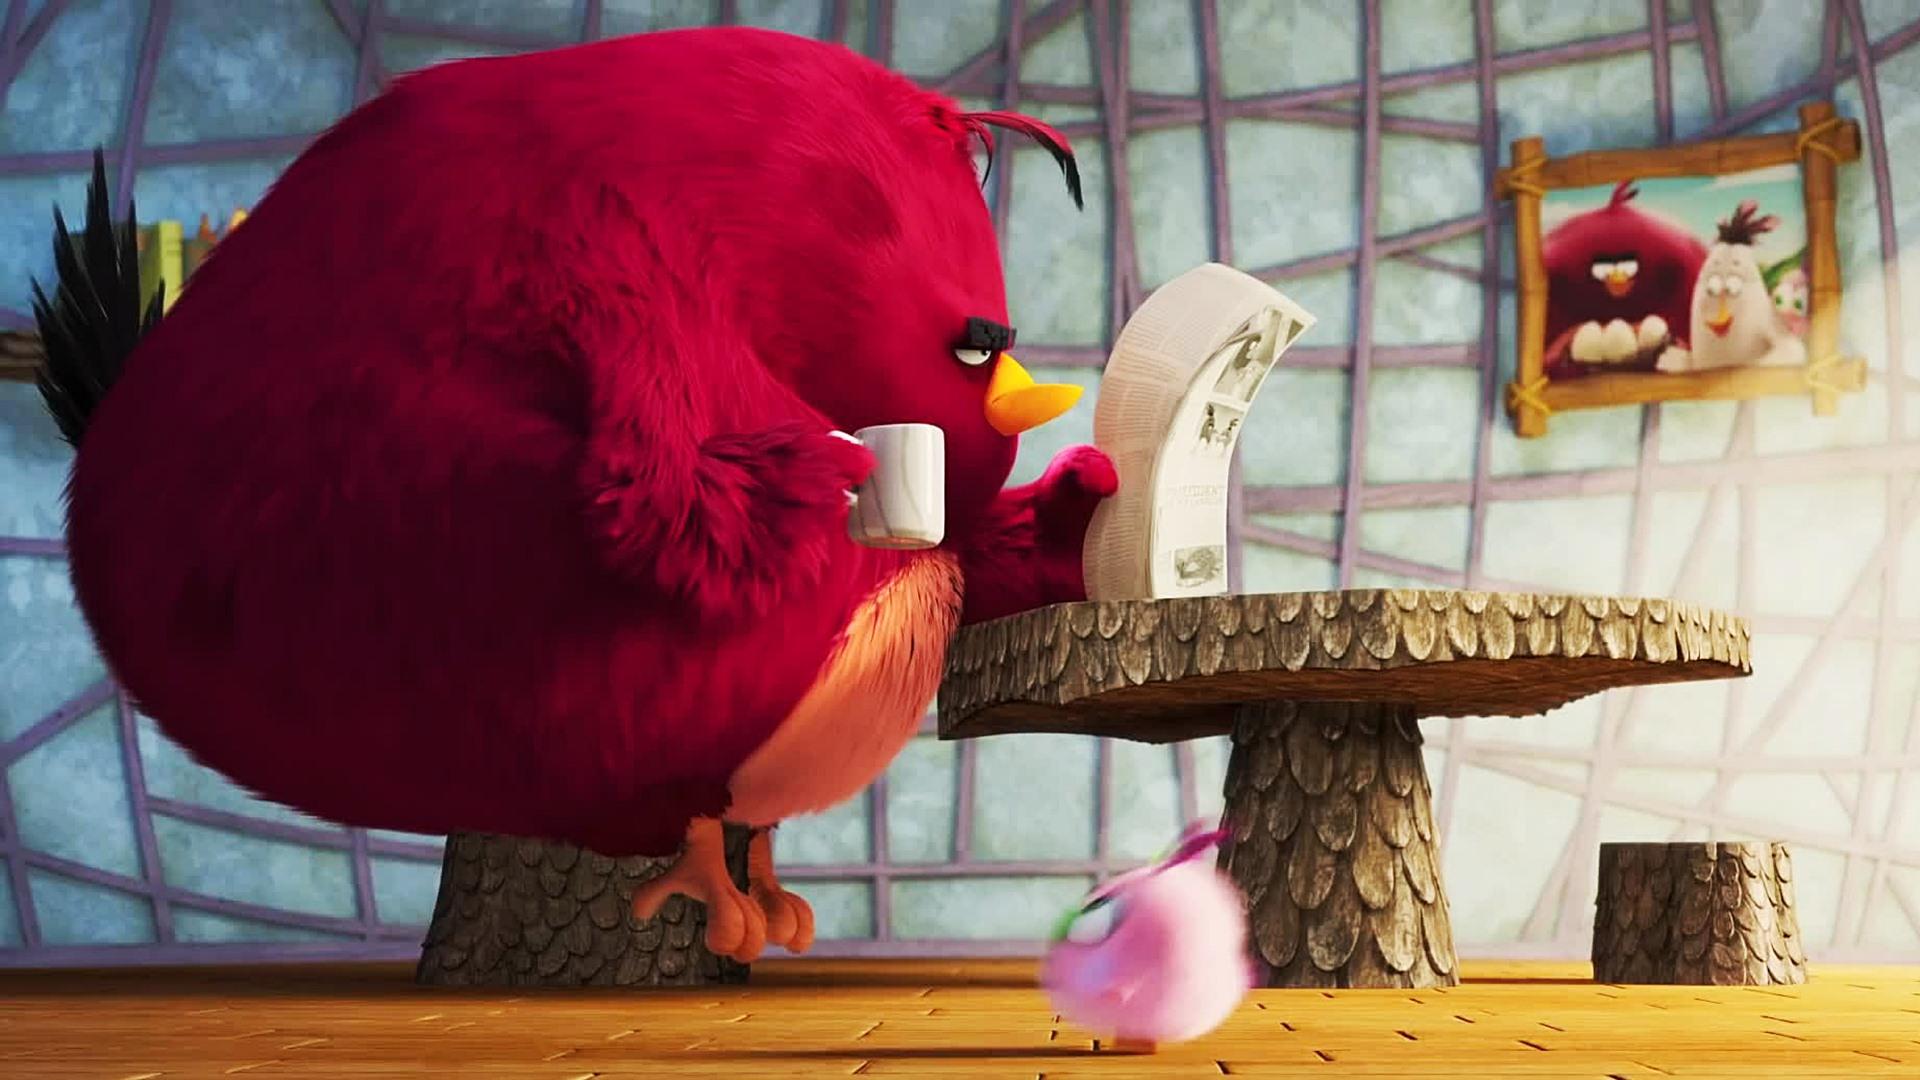 Fat Bird The Angry Birds Movie 2 Wallpaper 43307